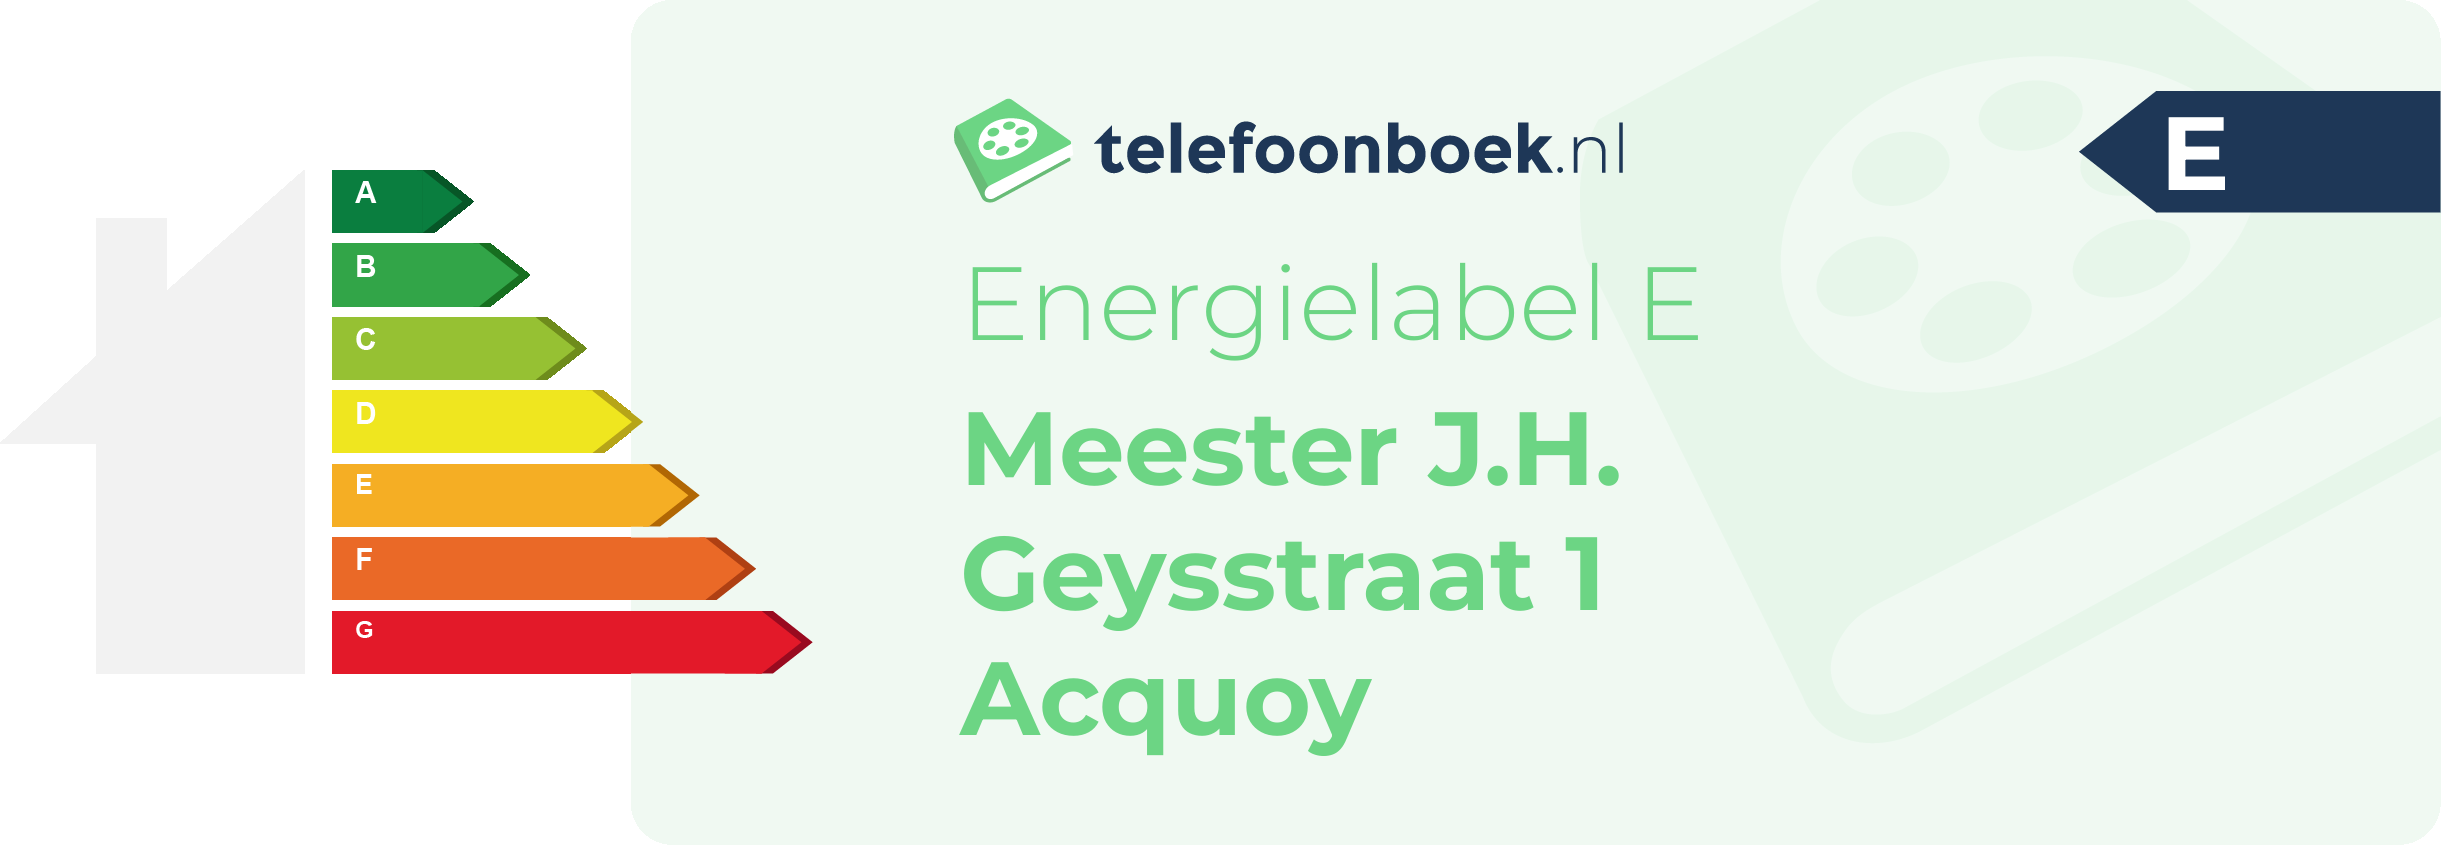 Energielabel Meester J.H. Geysstraat 1 Acquoy